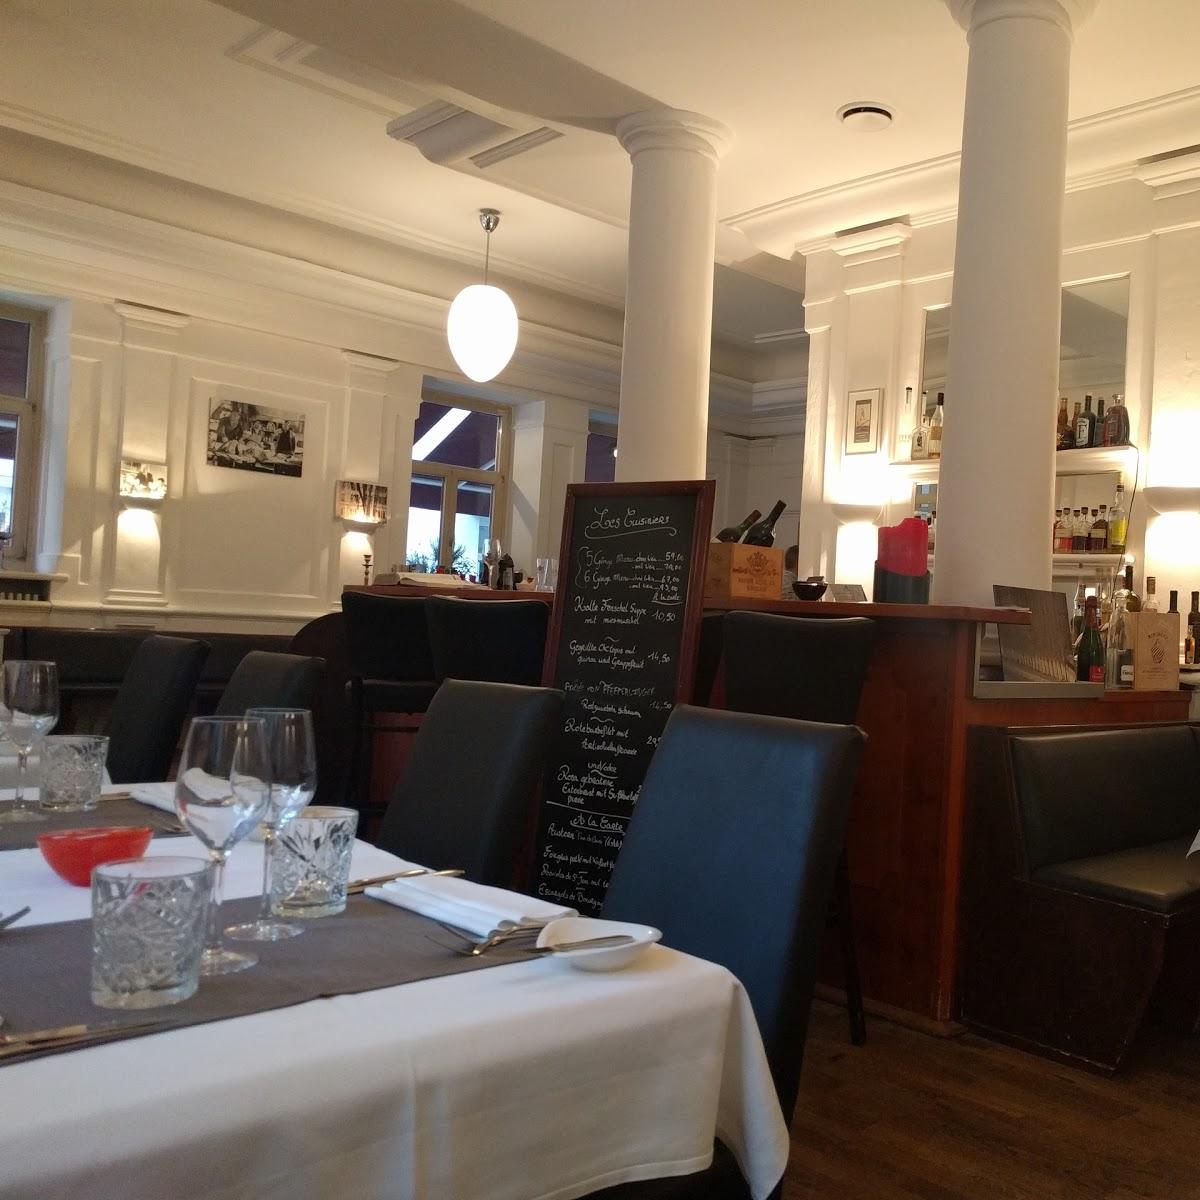 Restaurant "Les Cuisiniers" in München